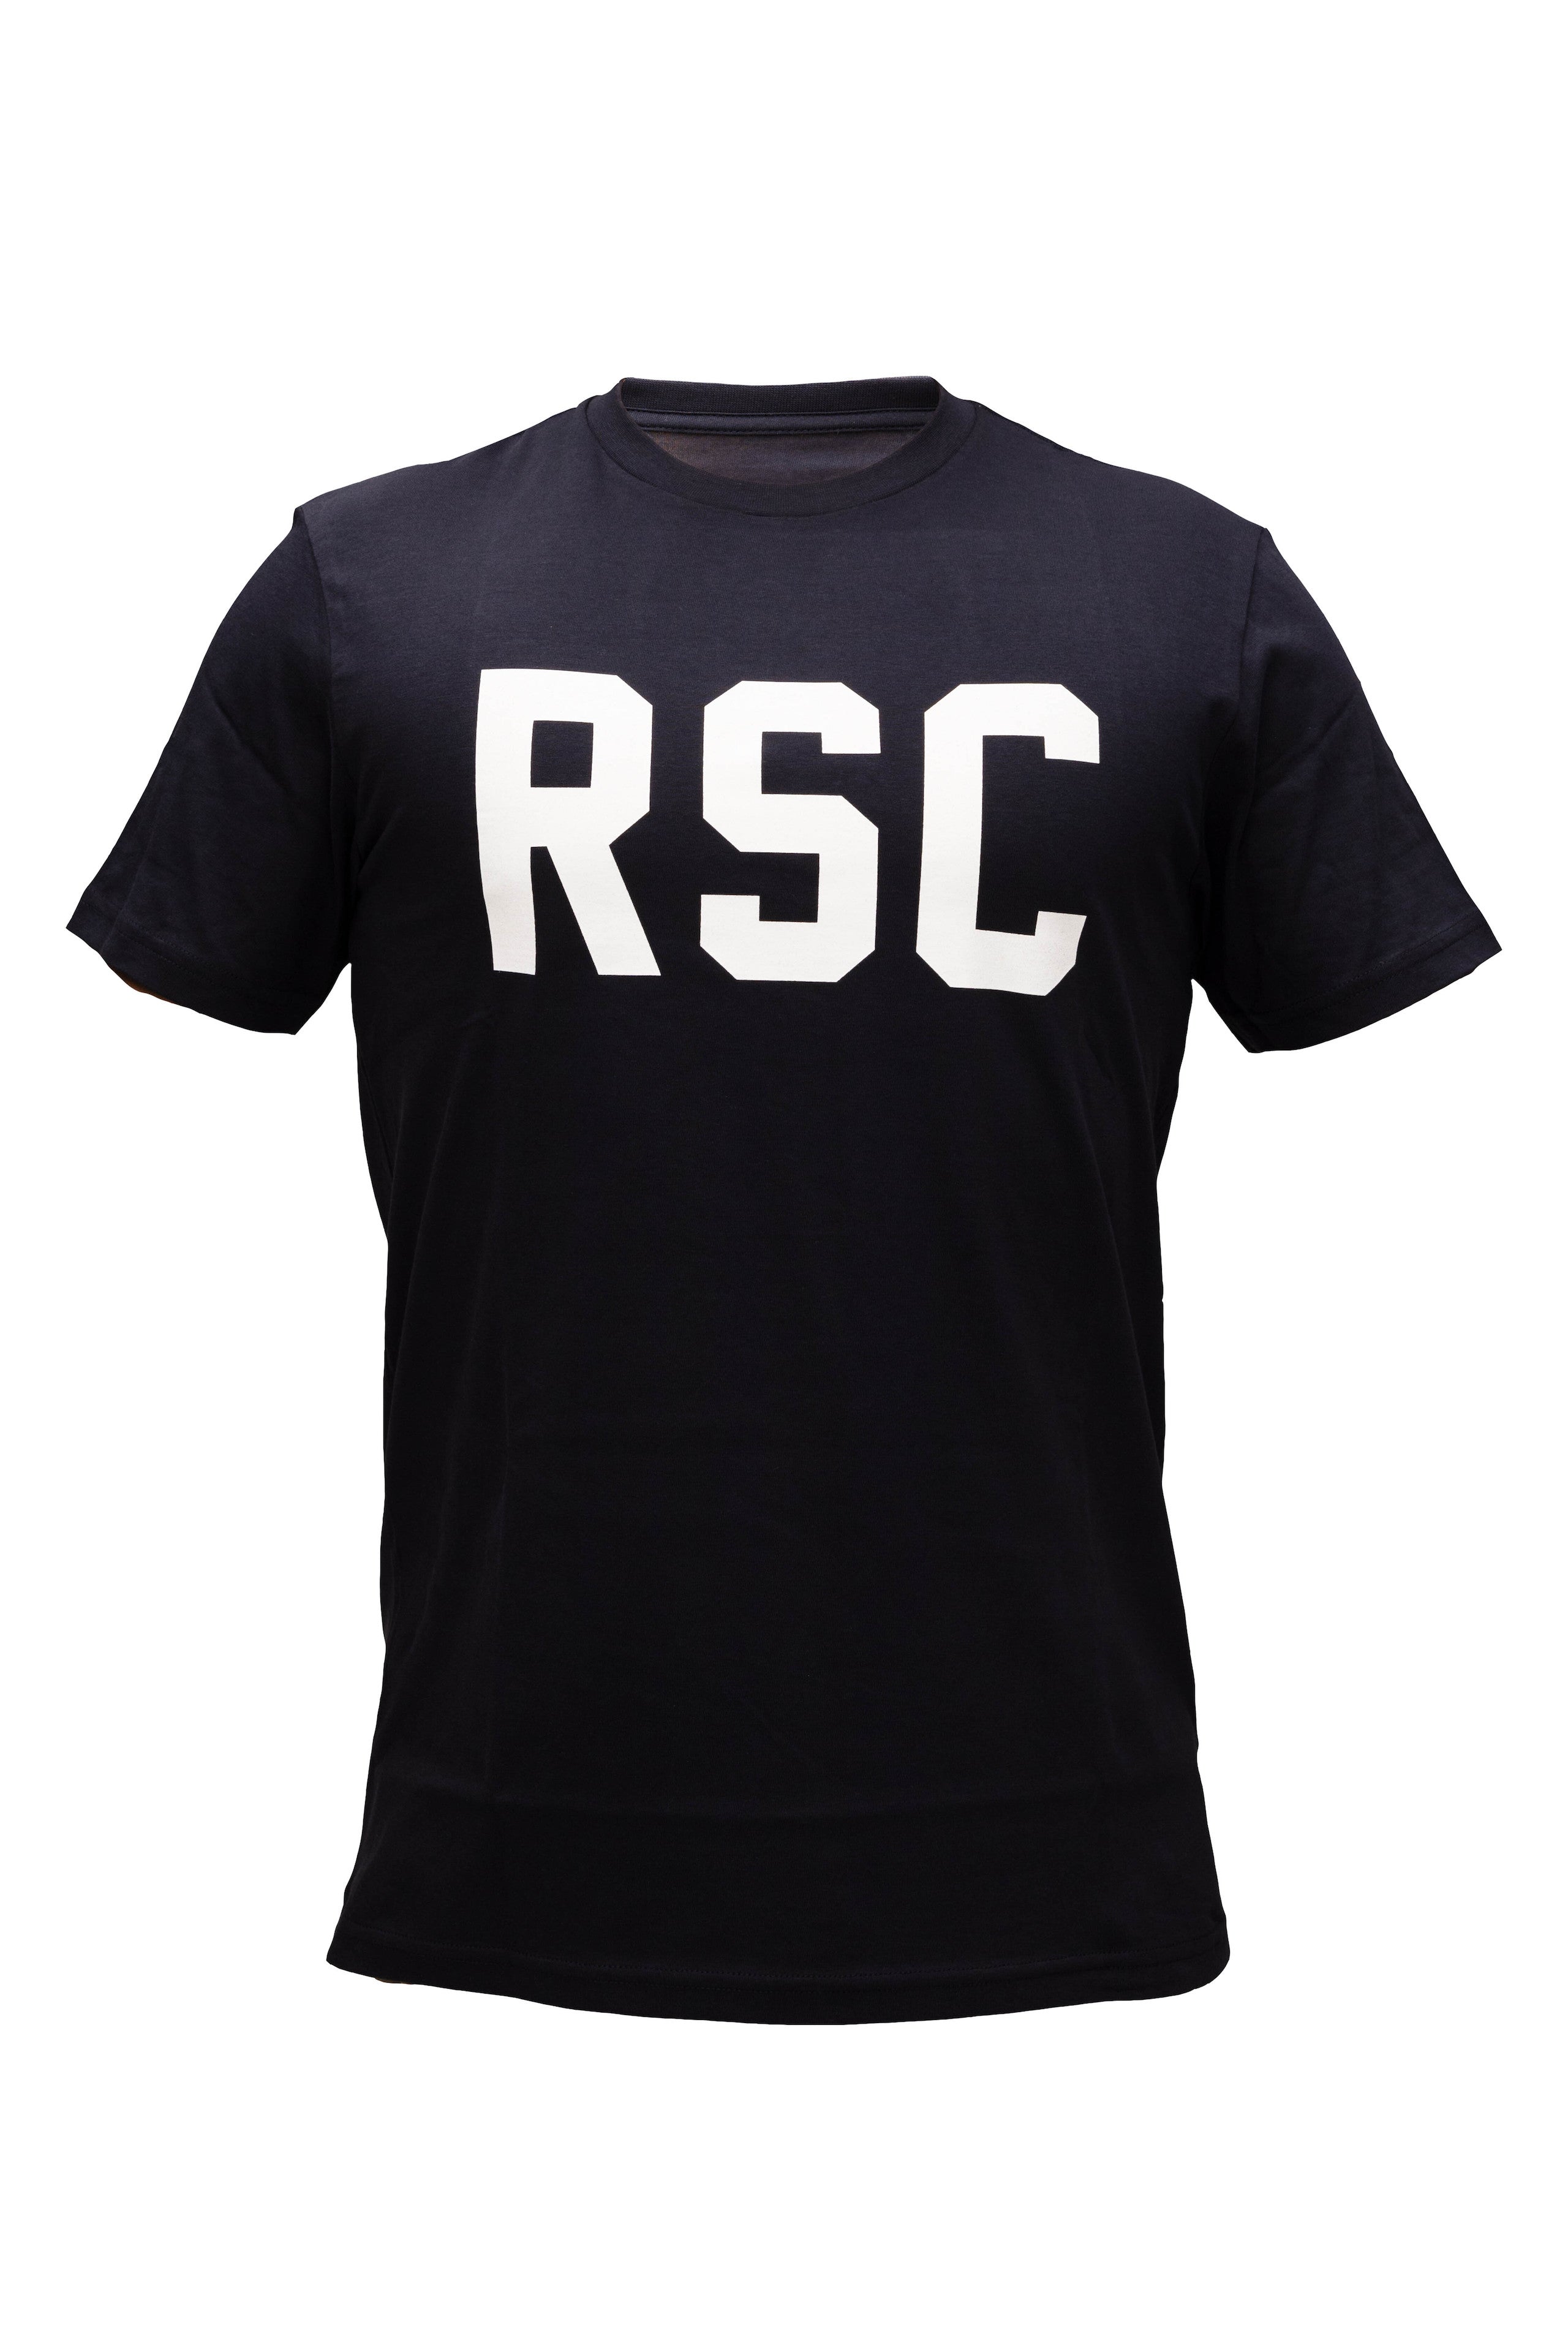 RSC Navy Blue T-Shirt